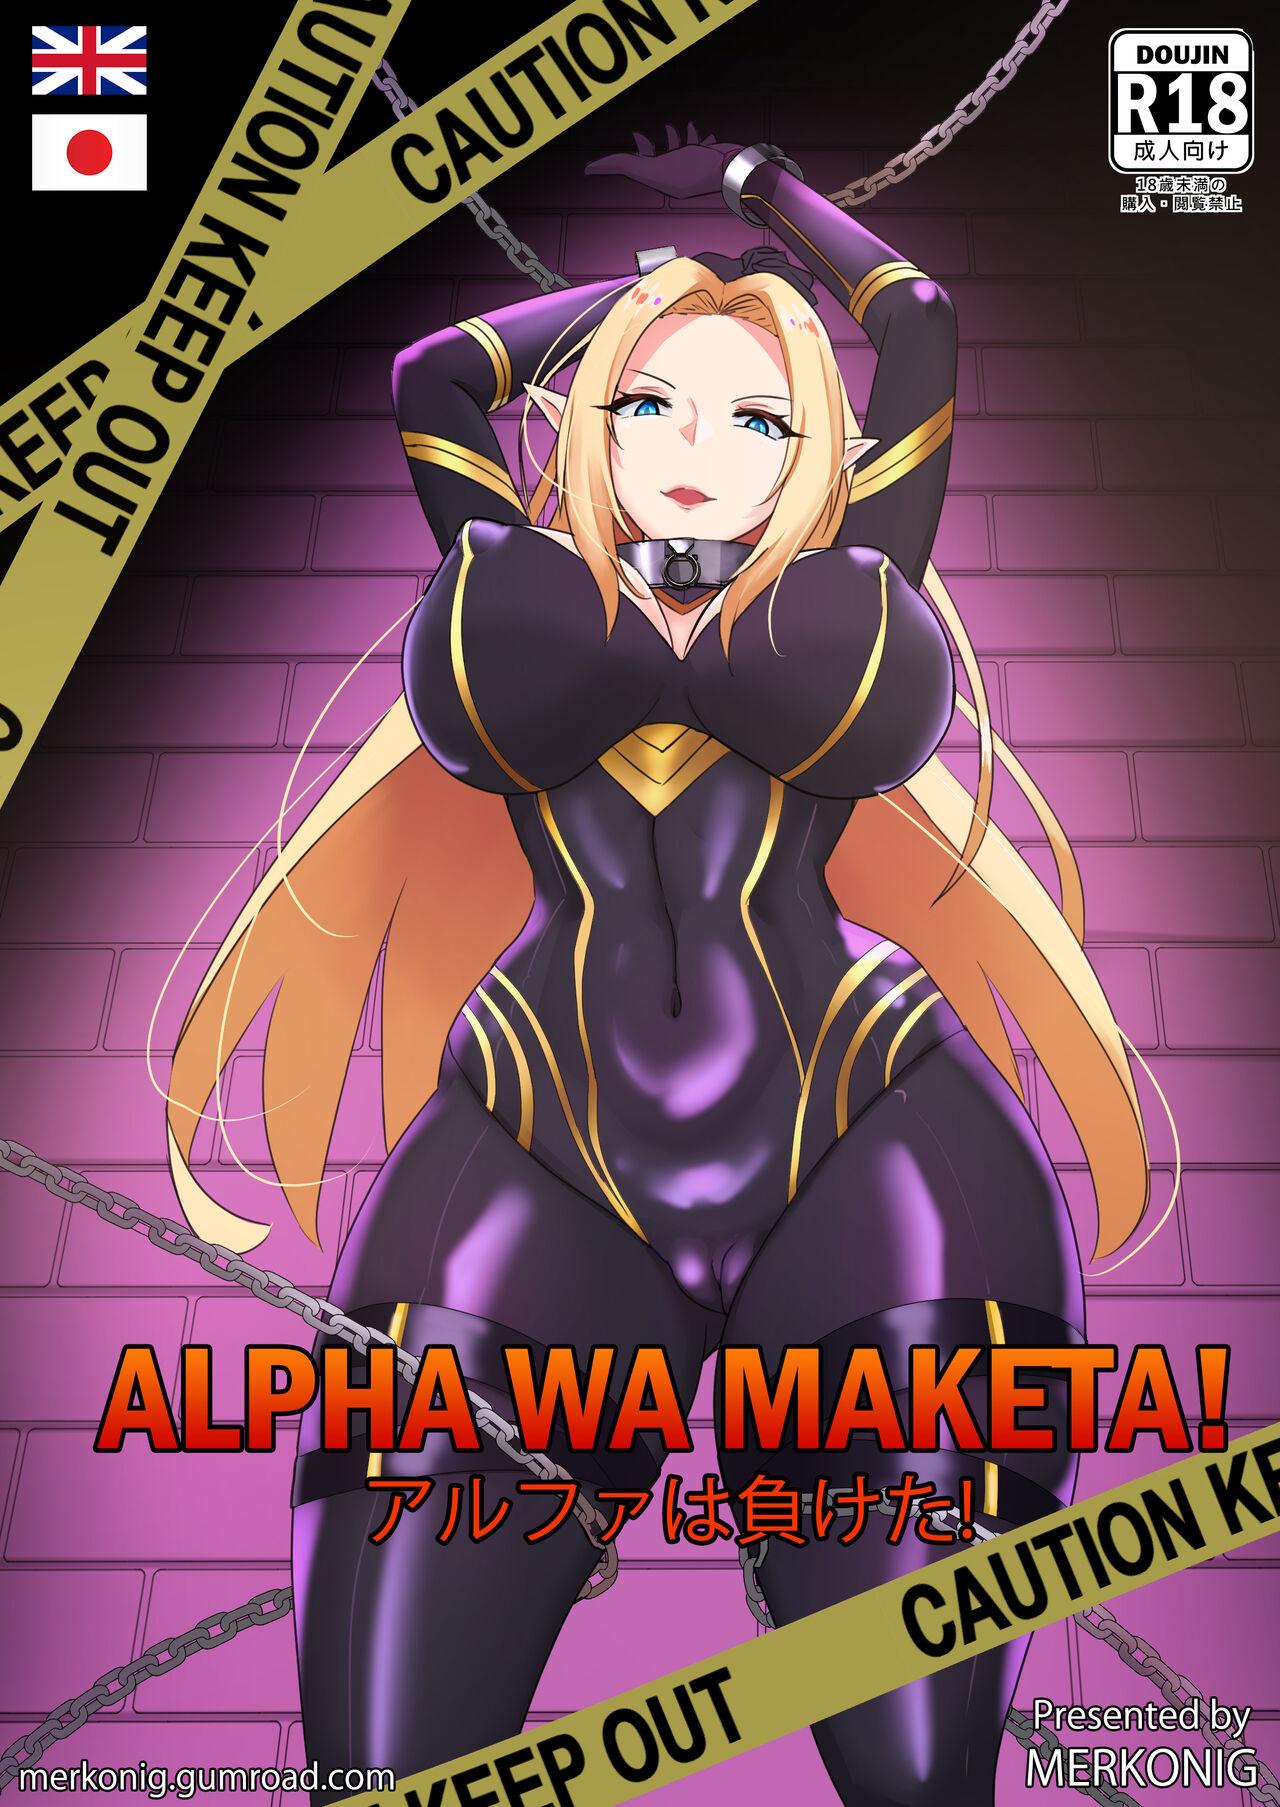 [merkonig] Alpha wa maketa! (Censored) EN 0